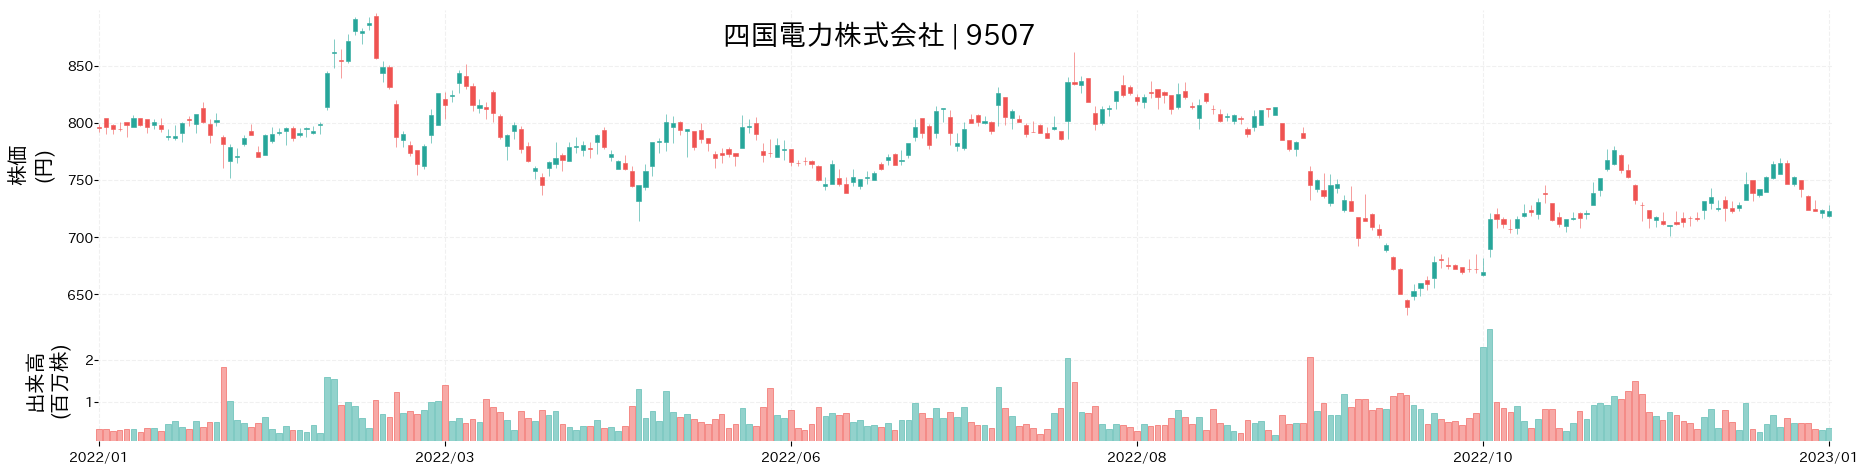 四国電力の株価推移(2022)